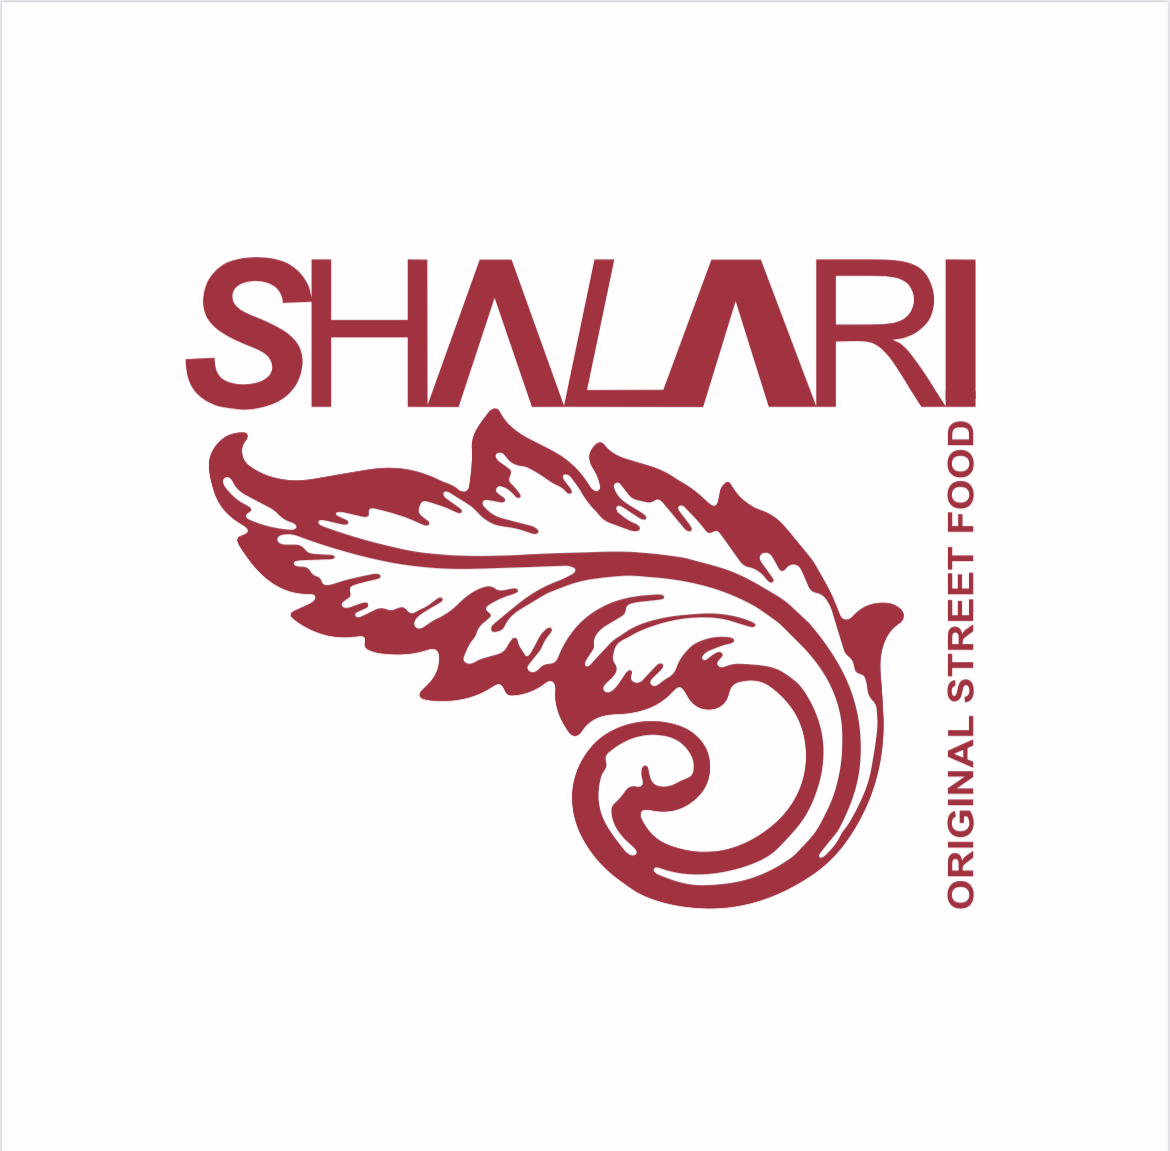 Shalari, original street food